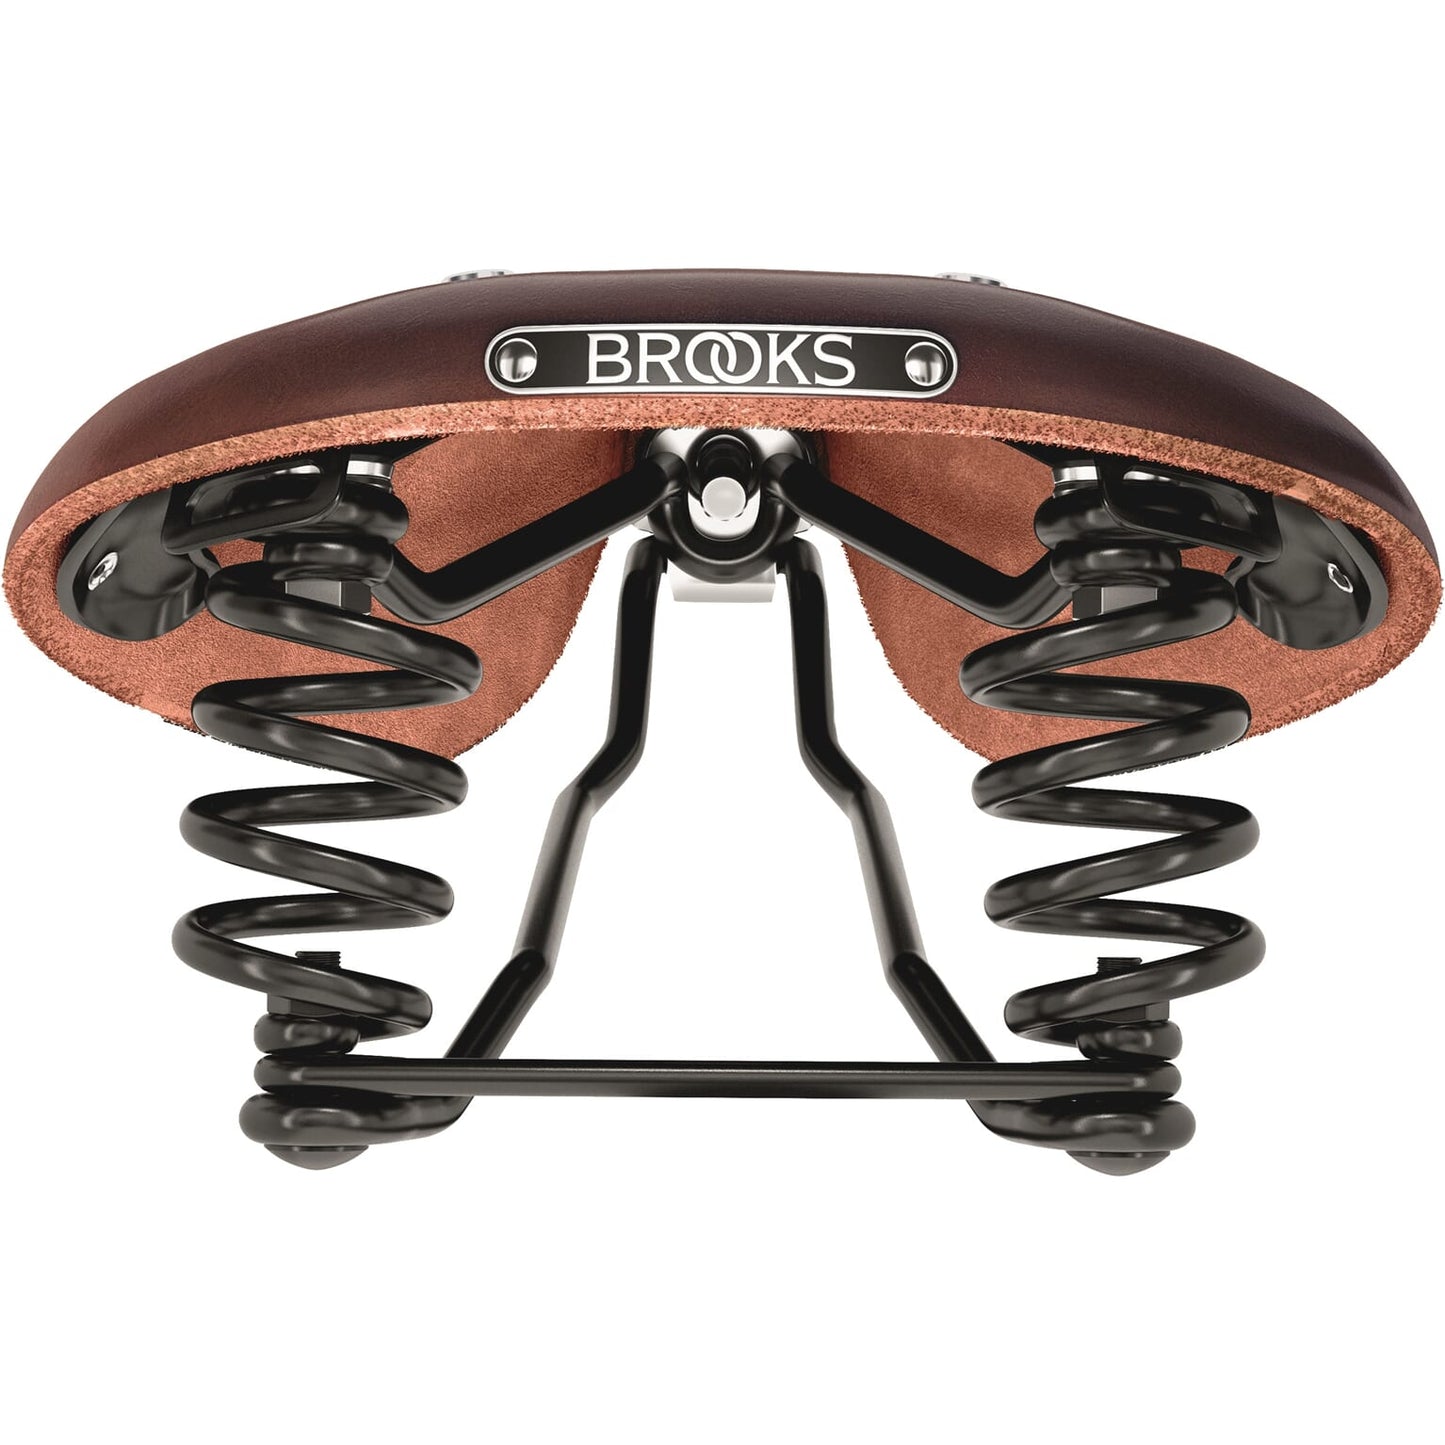 Brooks Saddle B396 Flyer S Ladies Brown